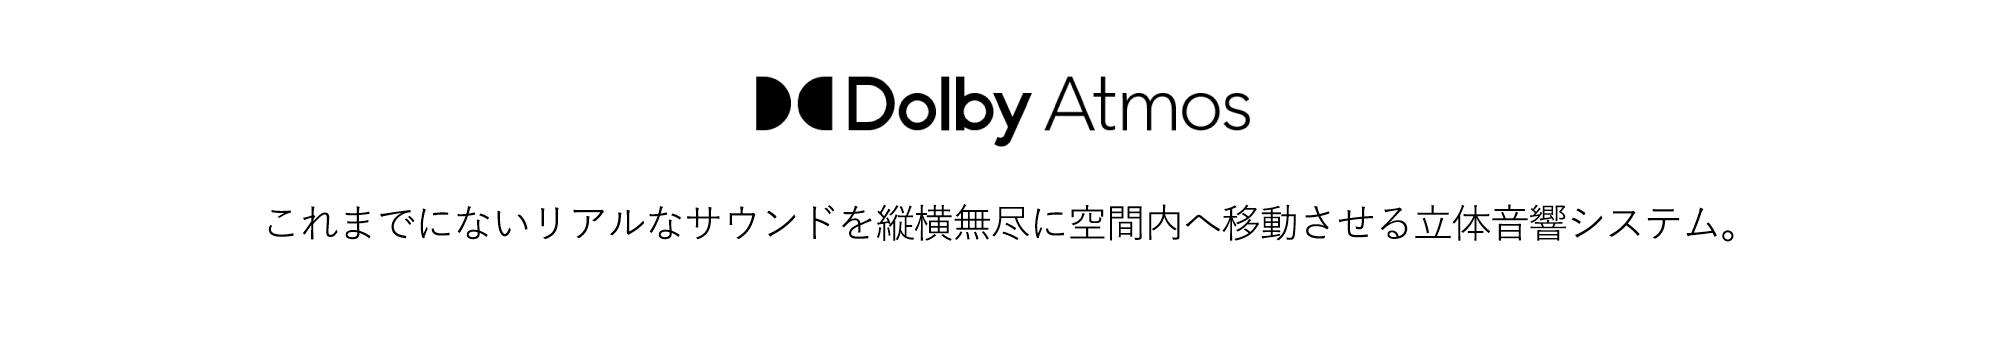 Dolby Atmos これまでにないリアルなサウンドを縦横無尽に空間内へ移動させる立体音響システム。